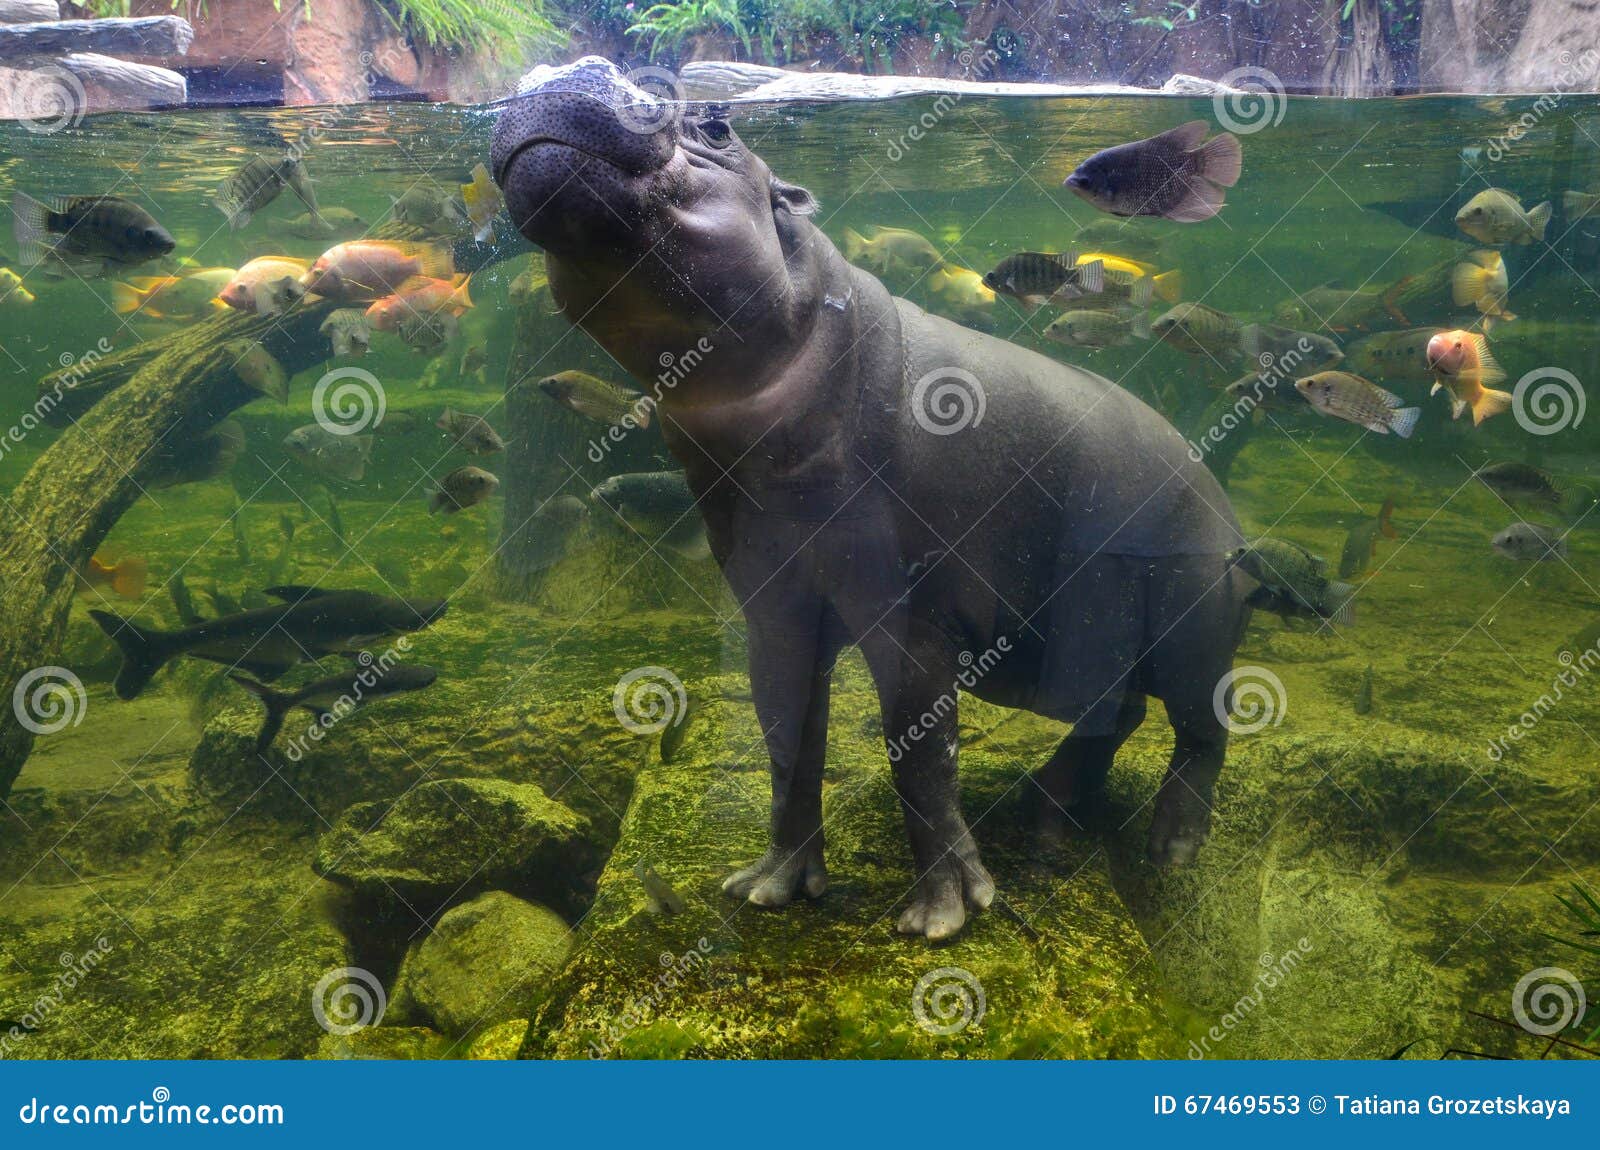 hippo, pygmy hippopotamus under water